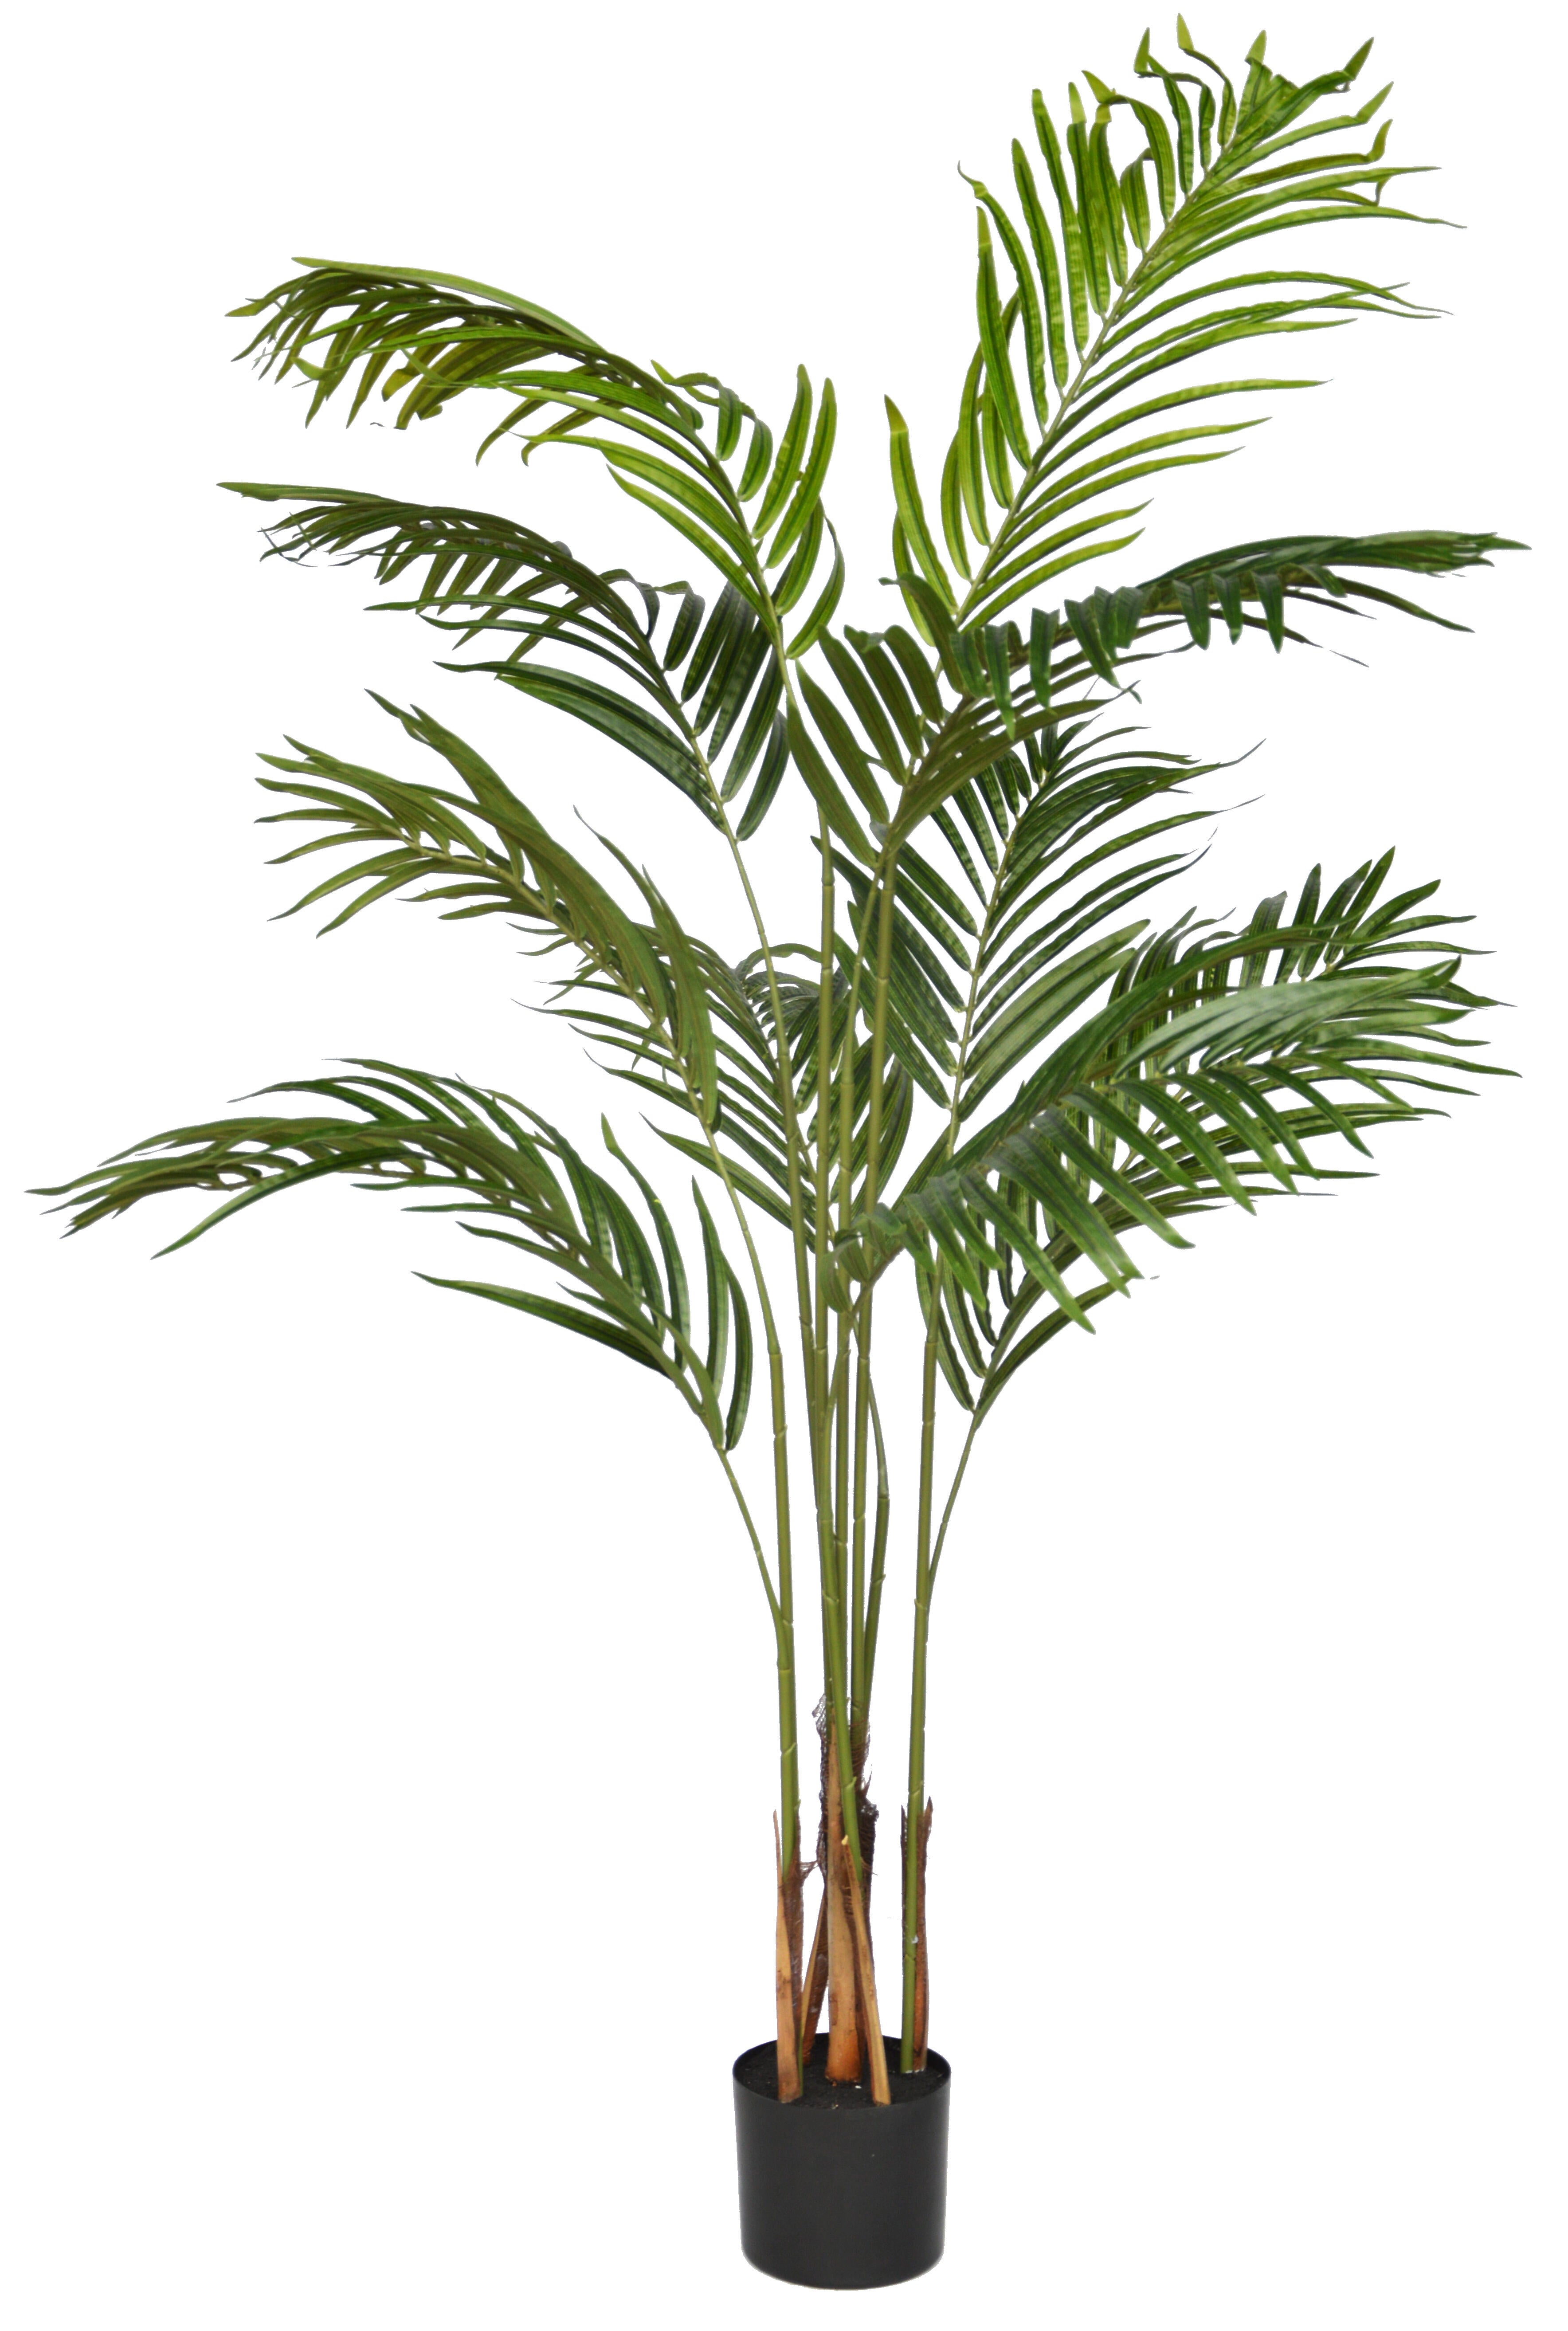 Árbol artificial Palmera Areca de 160 cm de altura en maceta de 16 cm